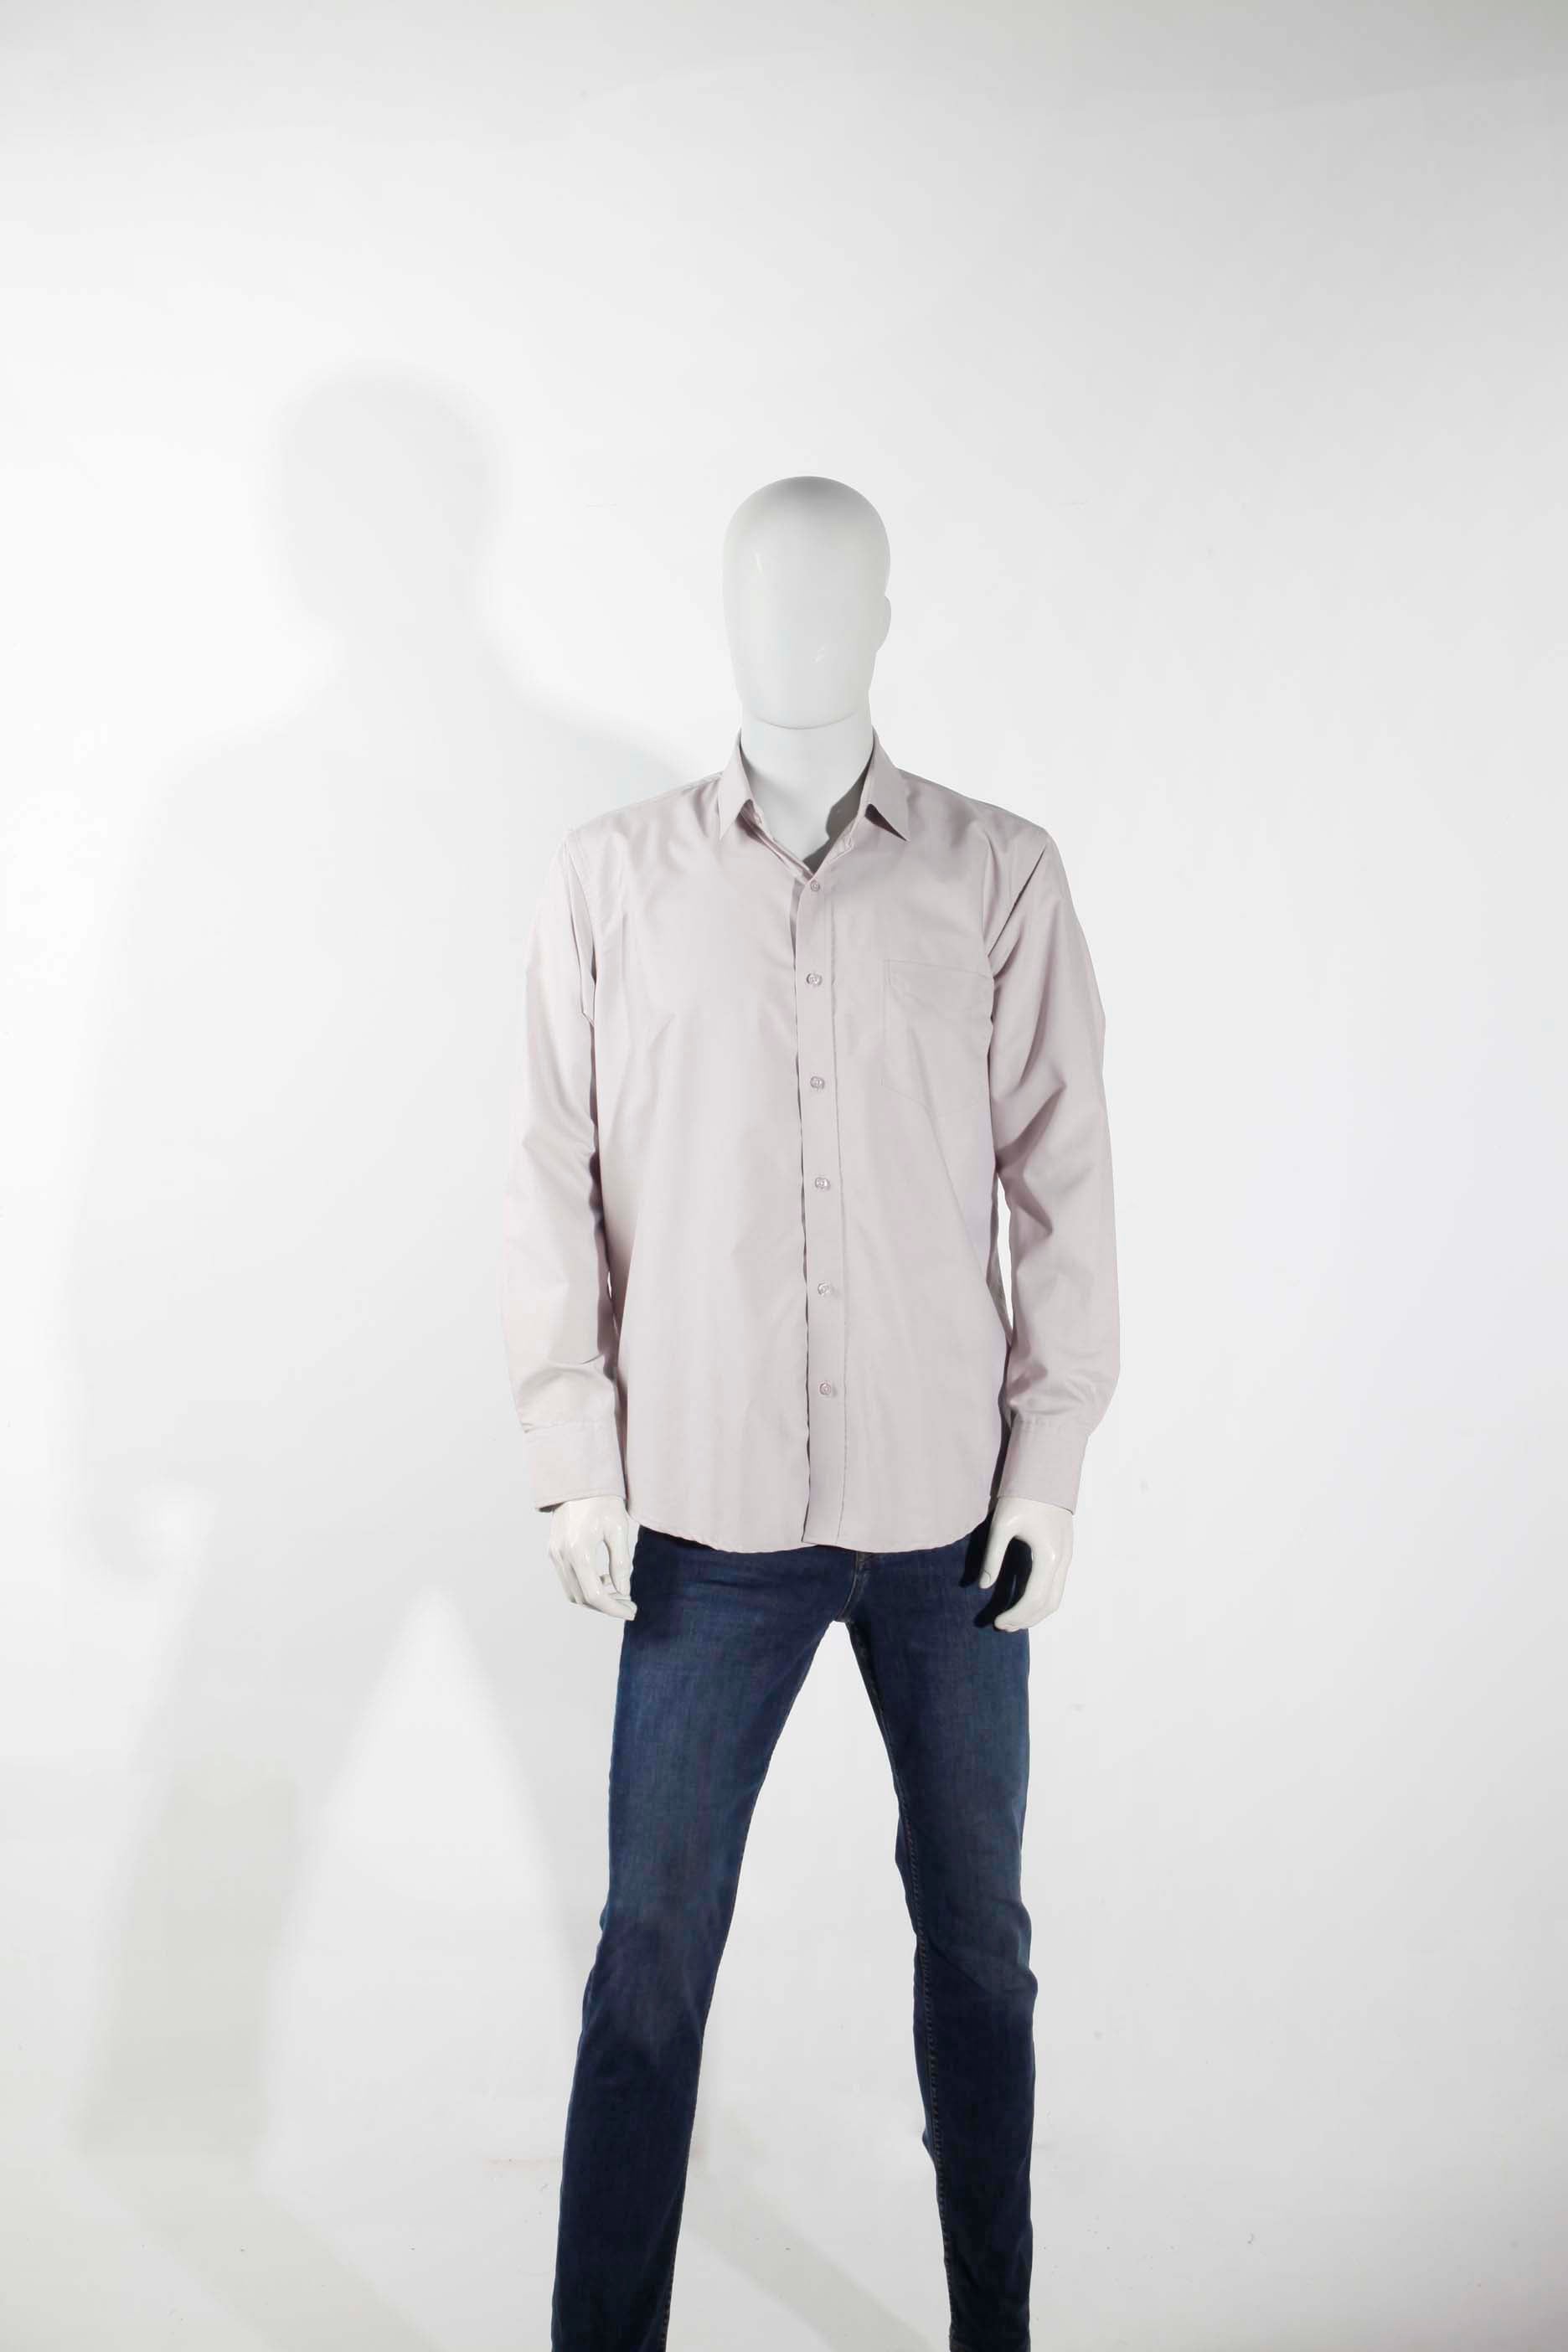 Mens Grey Shirt (Large)